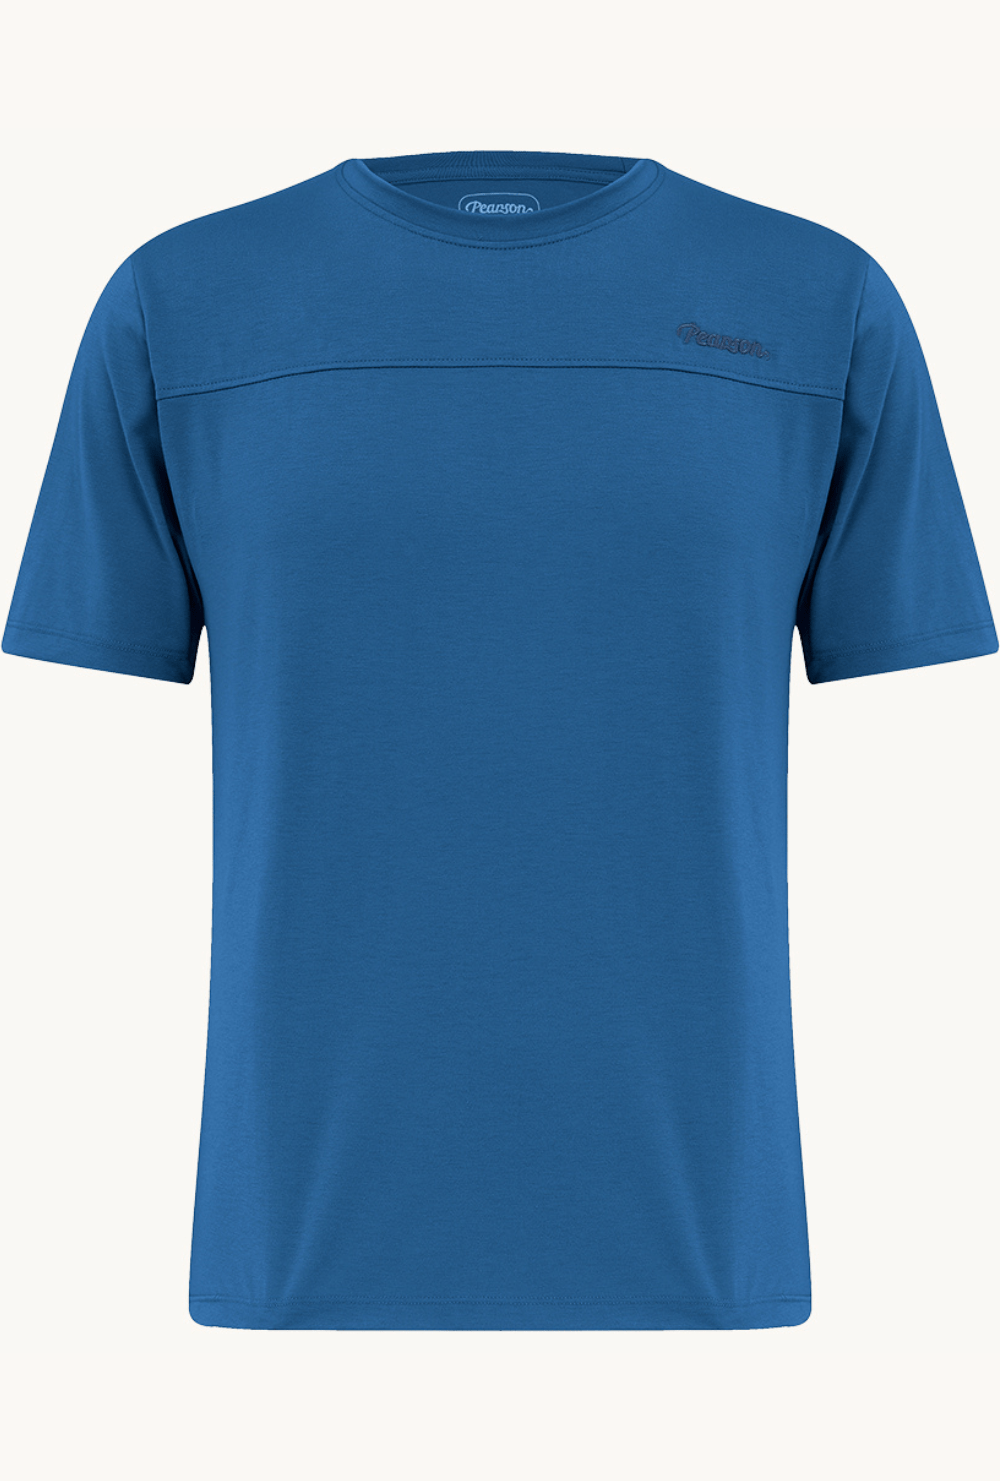 Pearson 1860  High DaysandHolidays - Cycling T-shirt Mid Blue  Mid Blue / Small